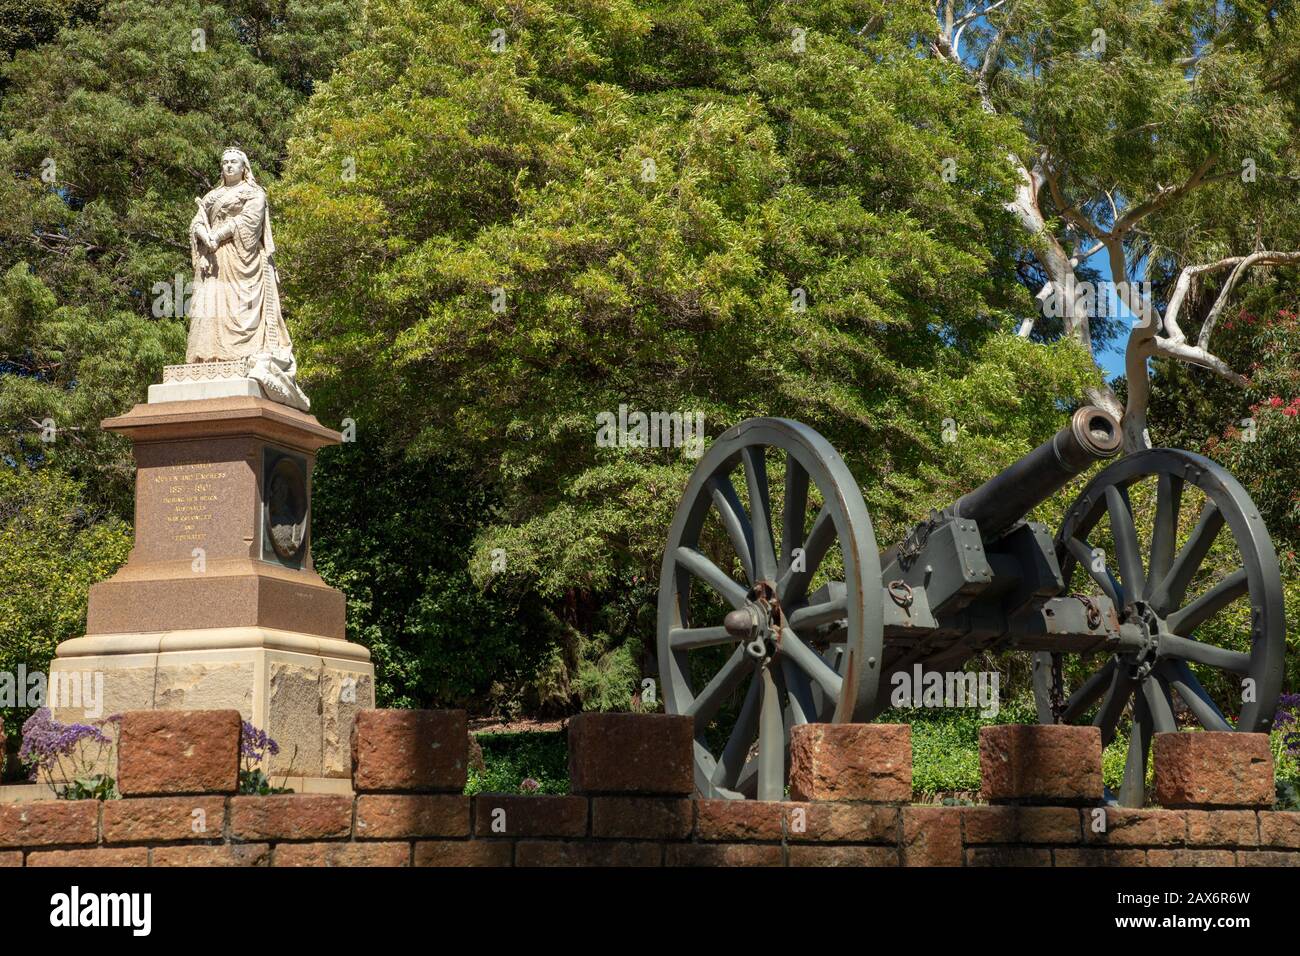 Statue of Queen Victoria seen in Kings Park, Perth, Australia. Stock Photo